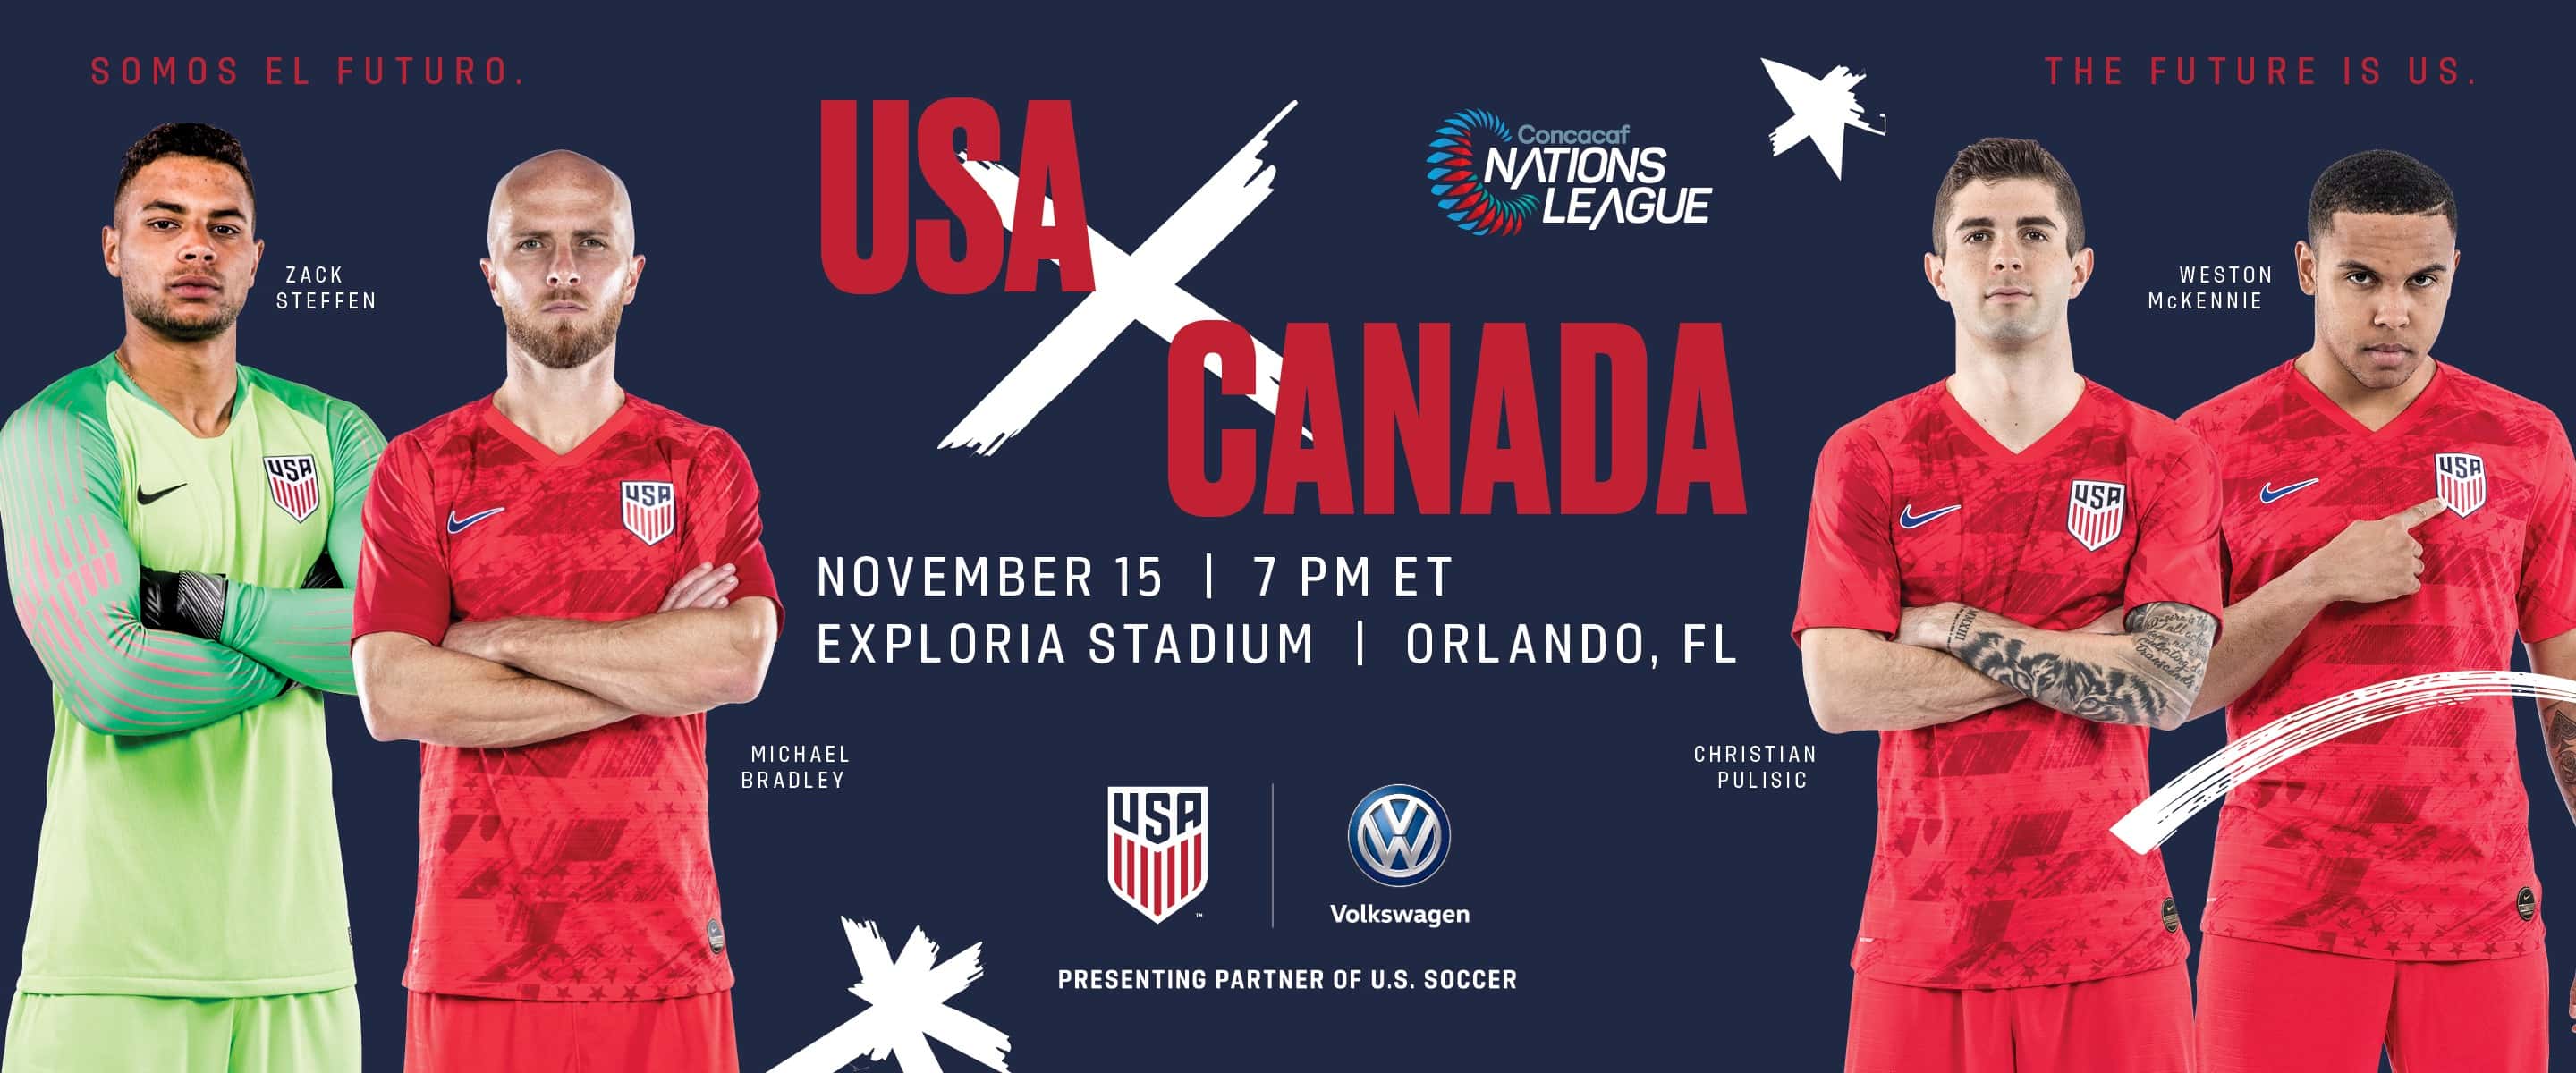 U.S. Soccer Selects Orlandos Exploria Stadium To Host U.S